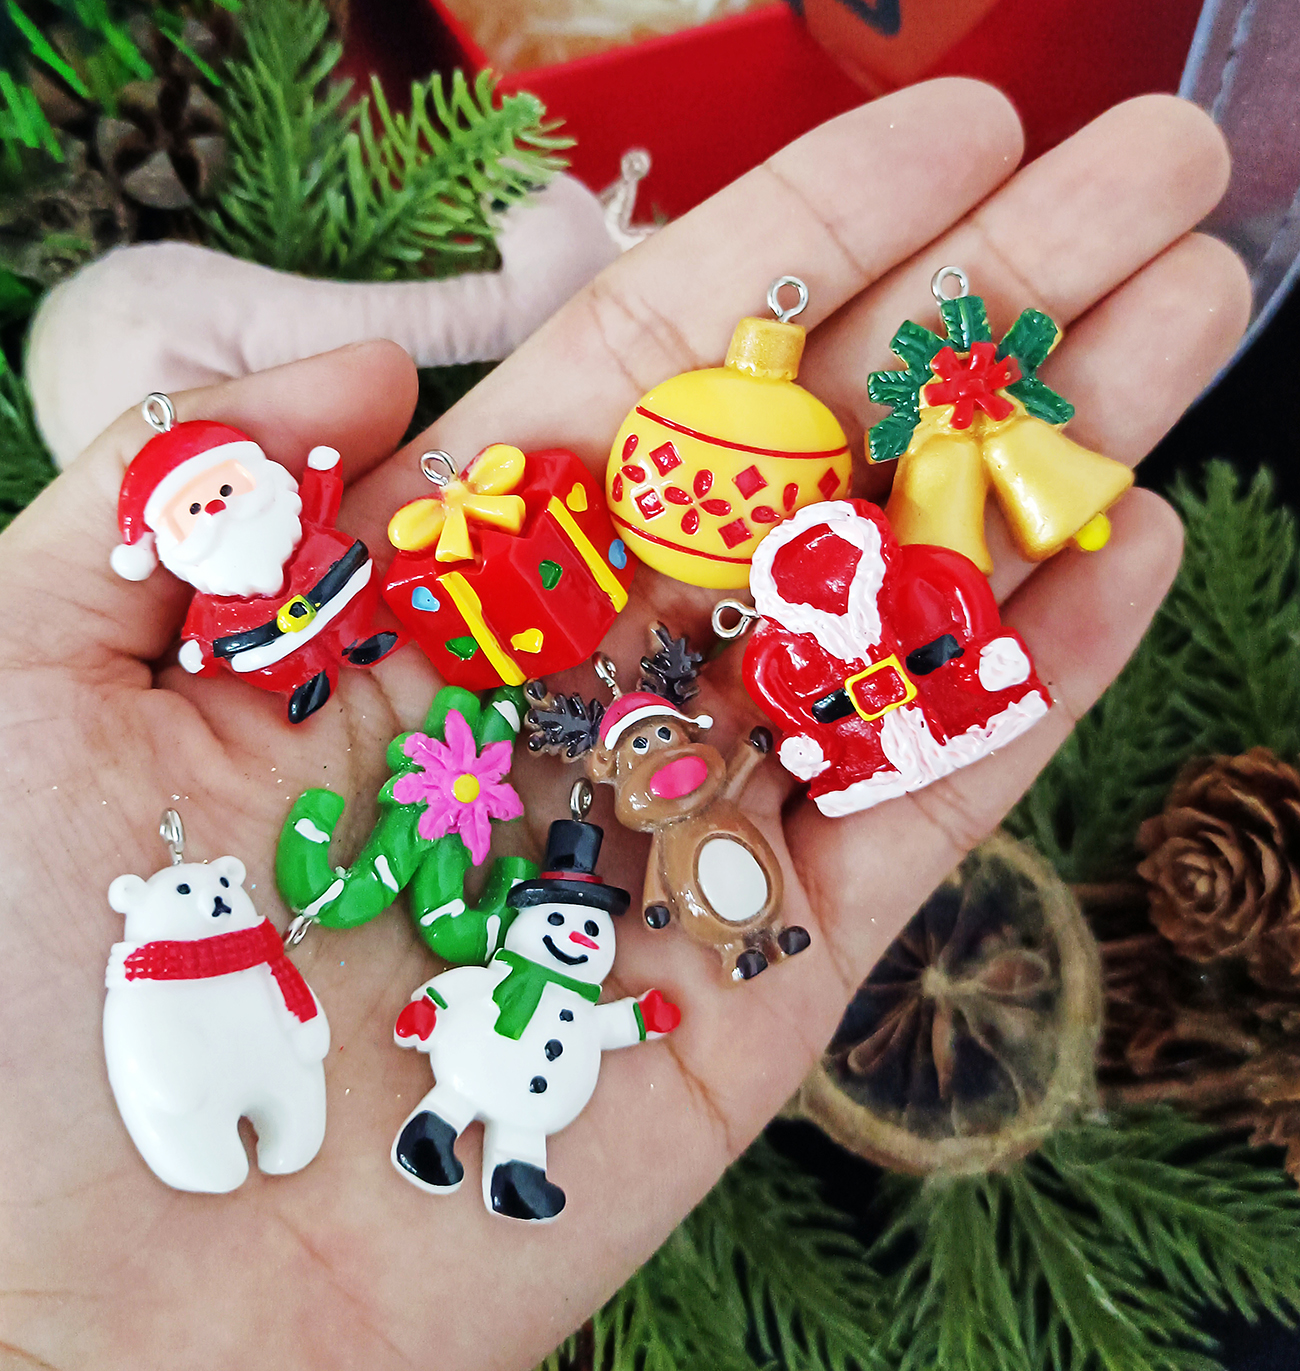 Mini Christmas Tree Ornaments Small Resin Christmas Ornaments for Mini  Christmas Tree Decorations 30 Pcs